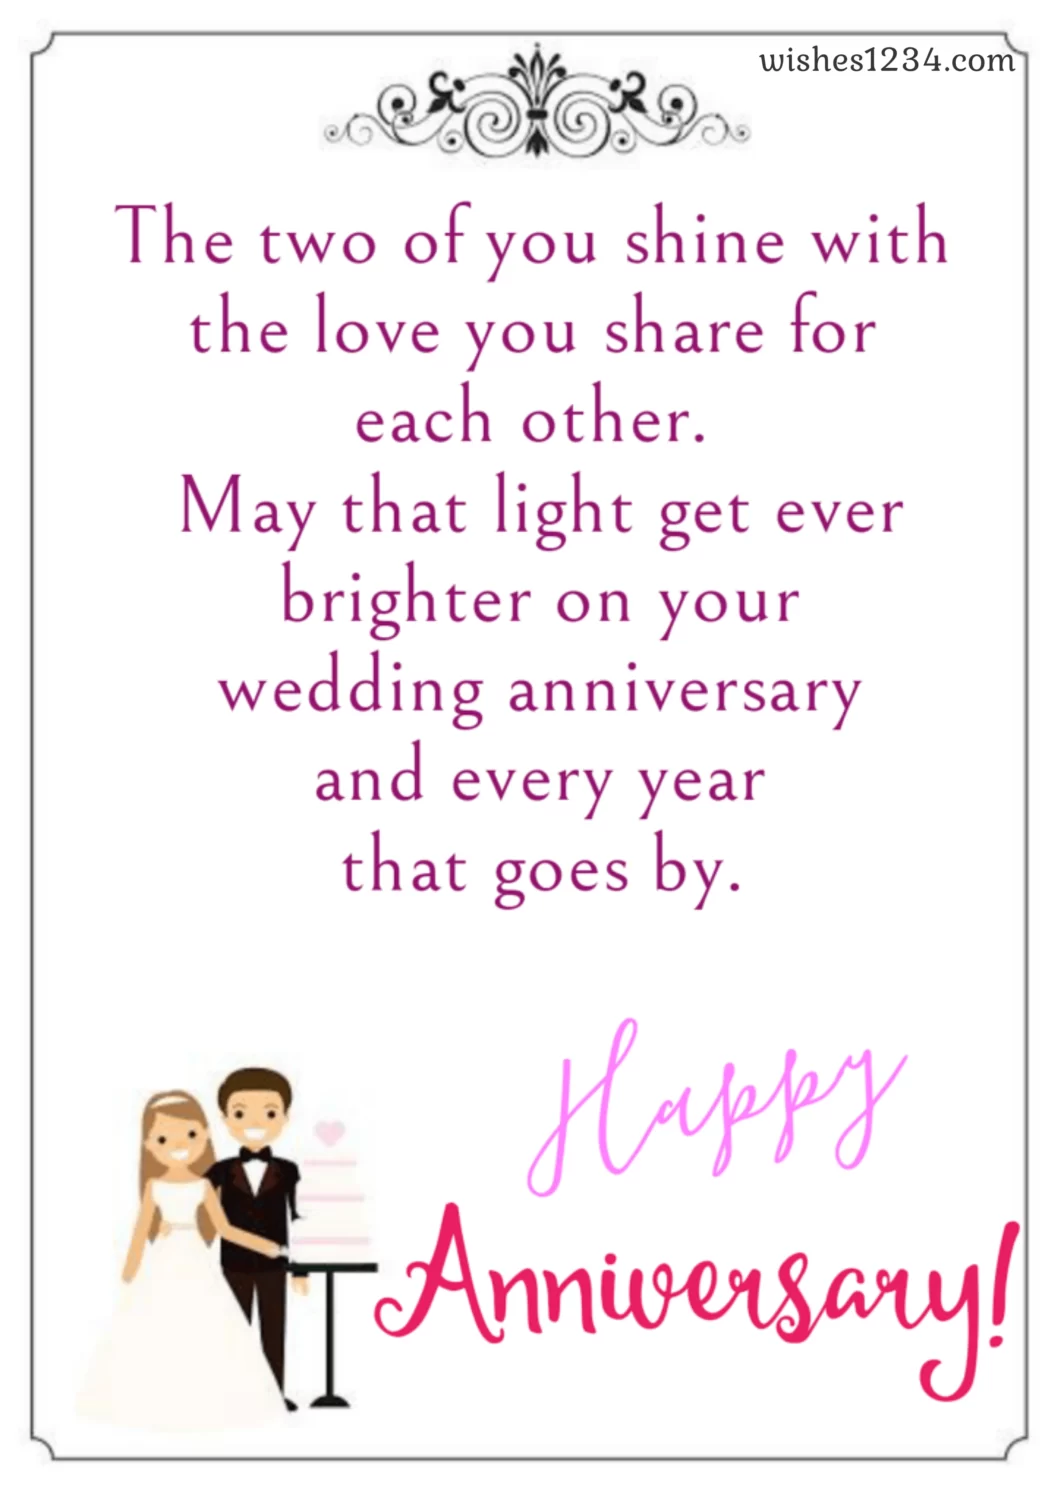 Bride and groom with wedding cake, Wedding anniversary quotes, Happy Wedding Anniversary.